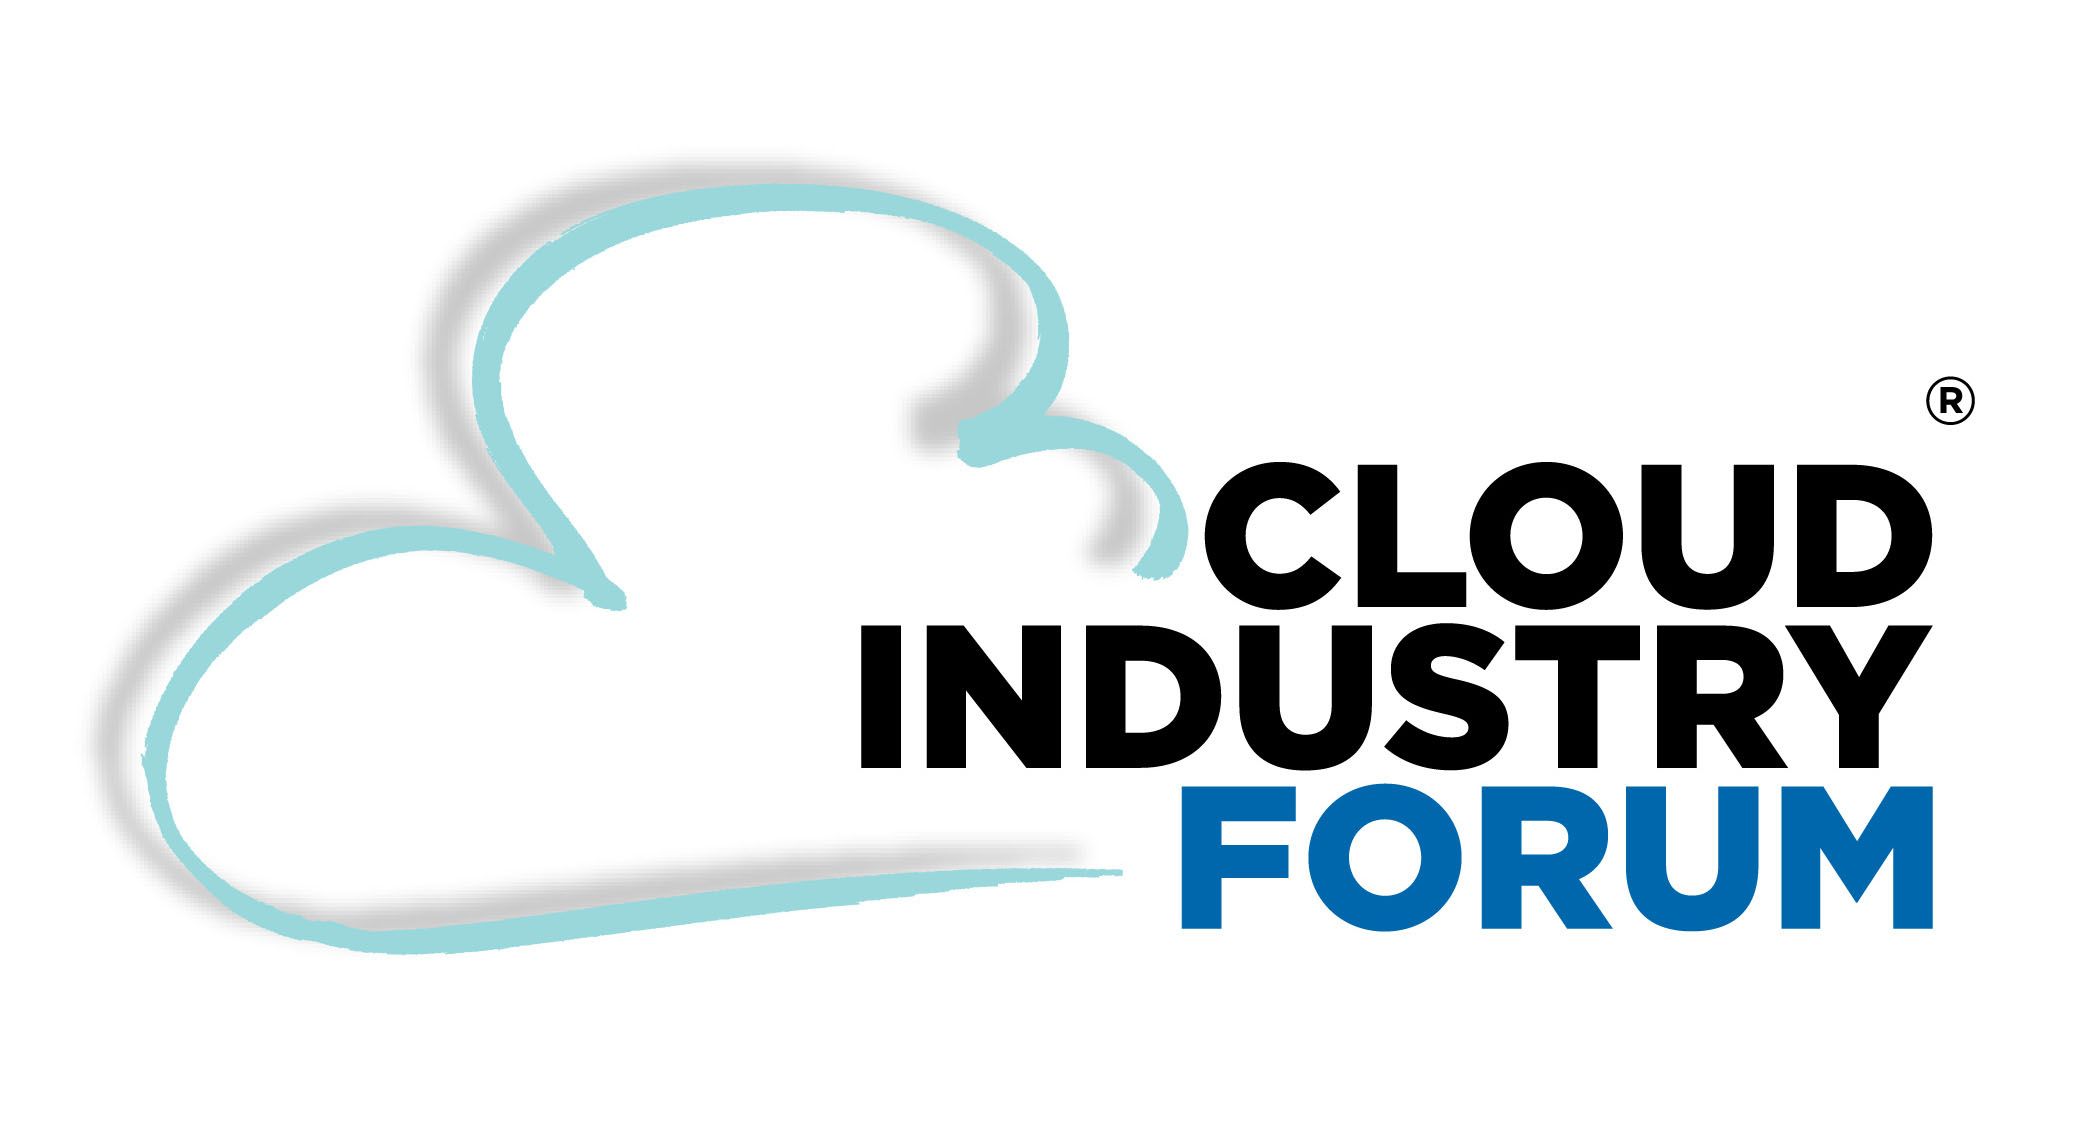 Cloud Industry Forum